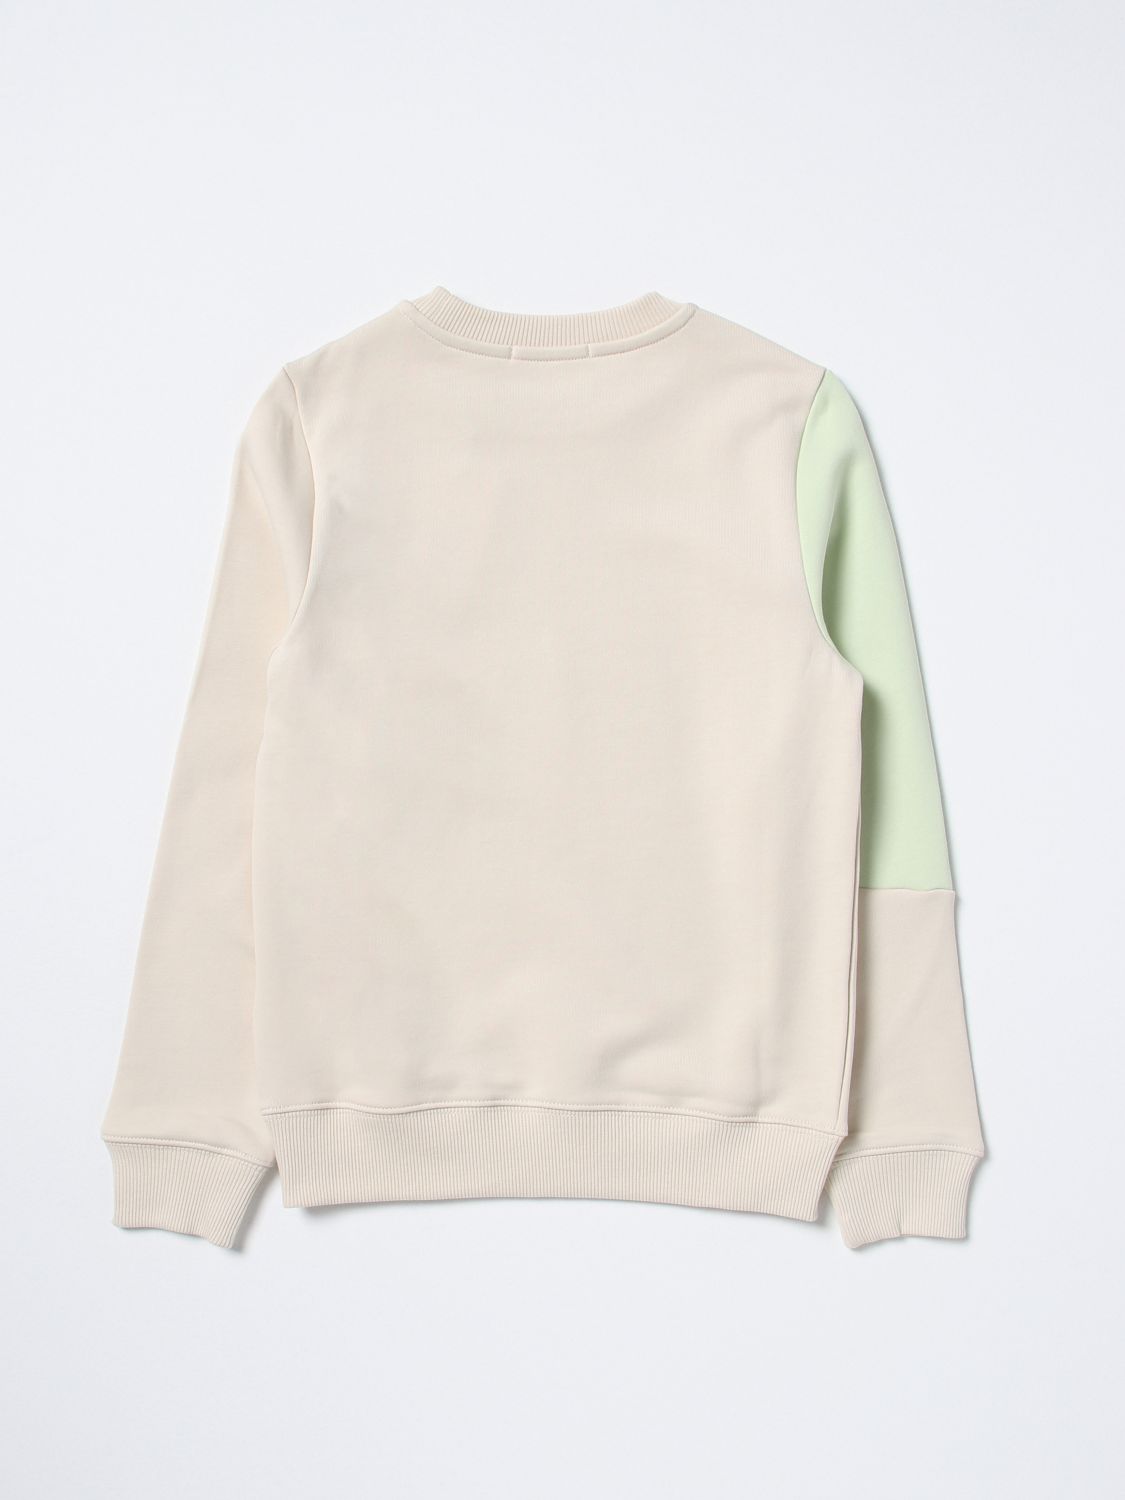 CALVIN KLEIN JEANS: sweater for boys - Beige | Calvin Klein Jeans sweater  IU0IU00370 online on 